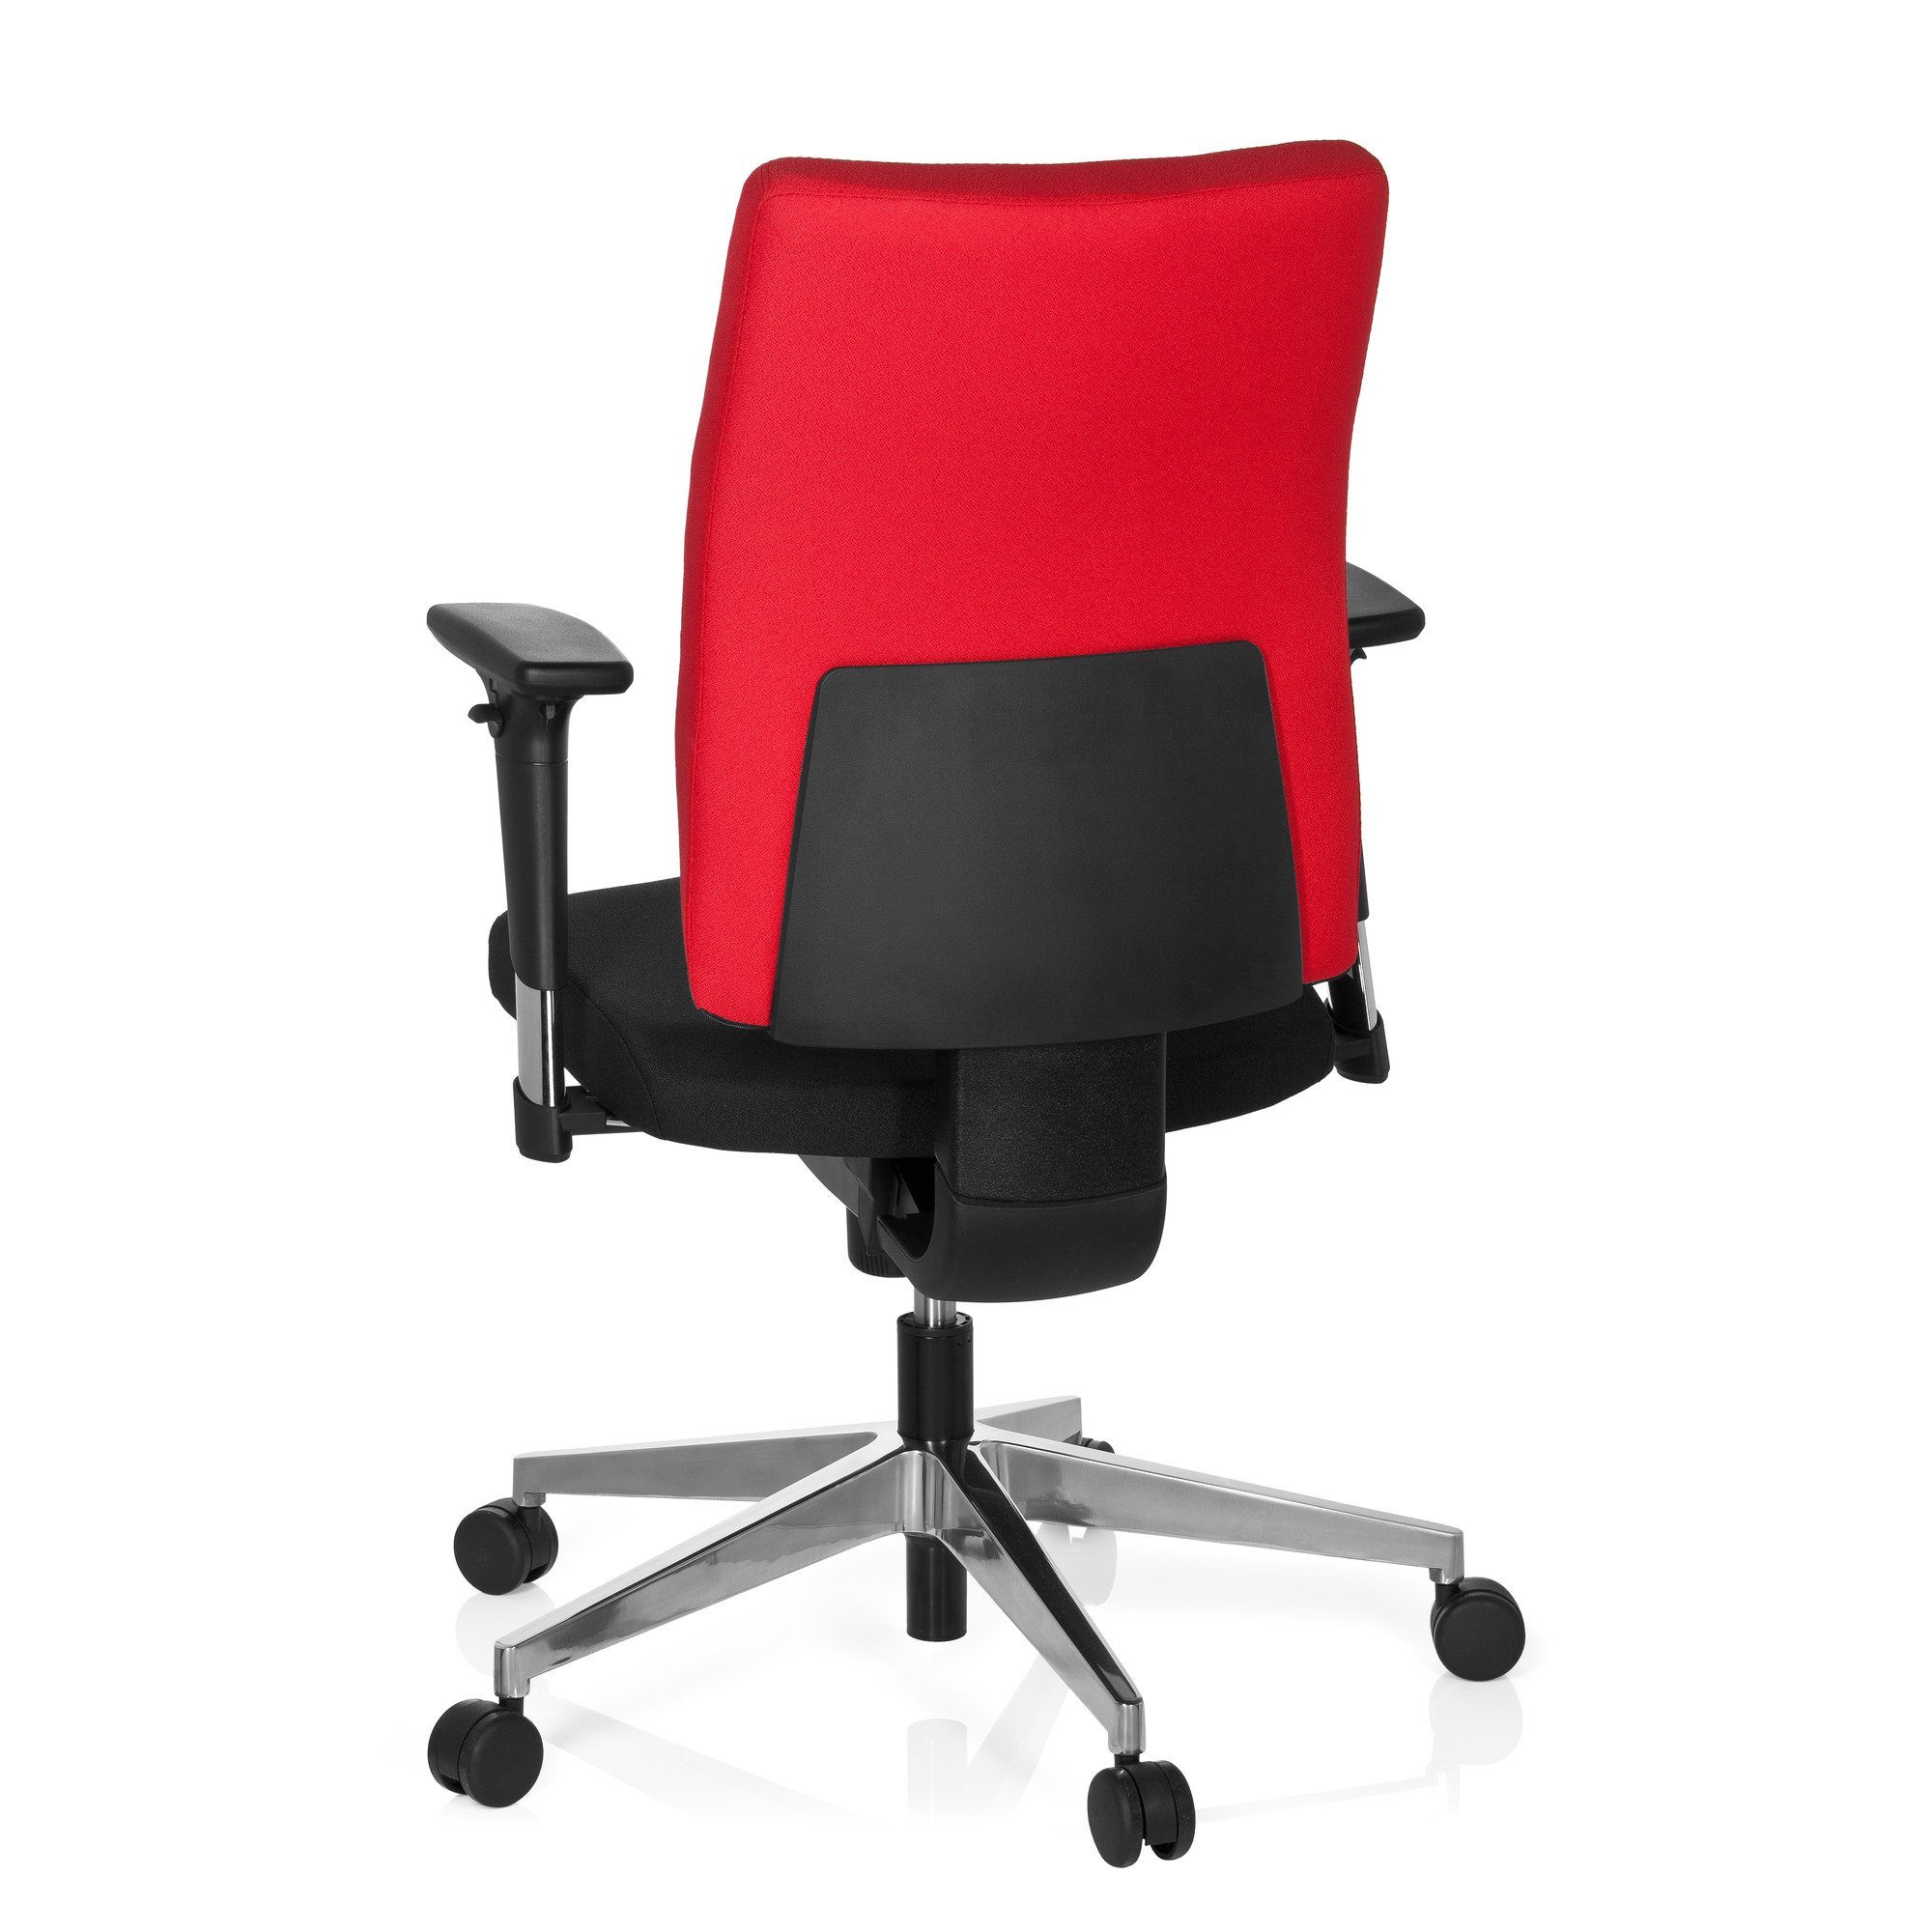 350 (1 Drehstuhl PRO-TEC Profi St), OFFICE ergonomisch hjh Schwarz/Rot Stoff Schreibtischstuhl Bürostuhl